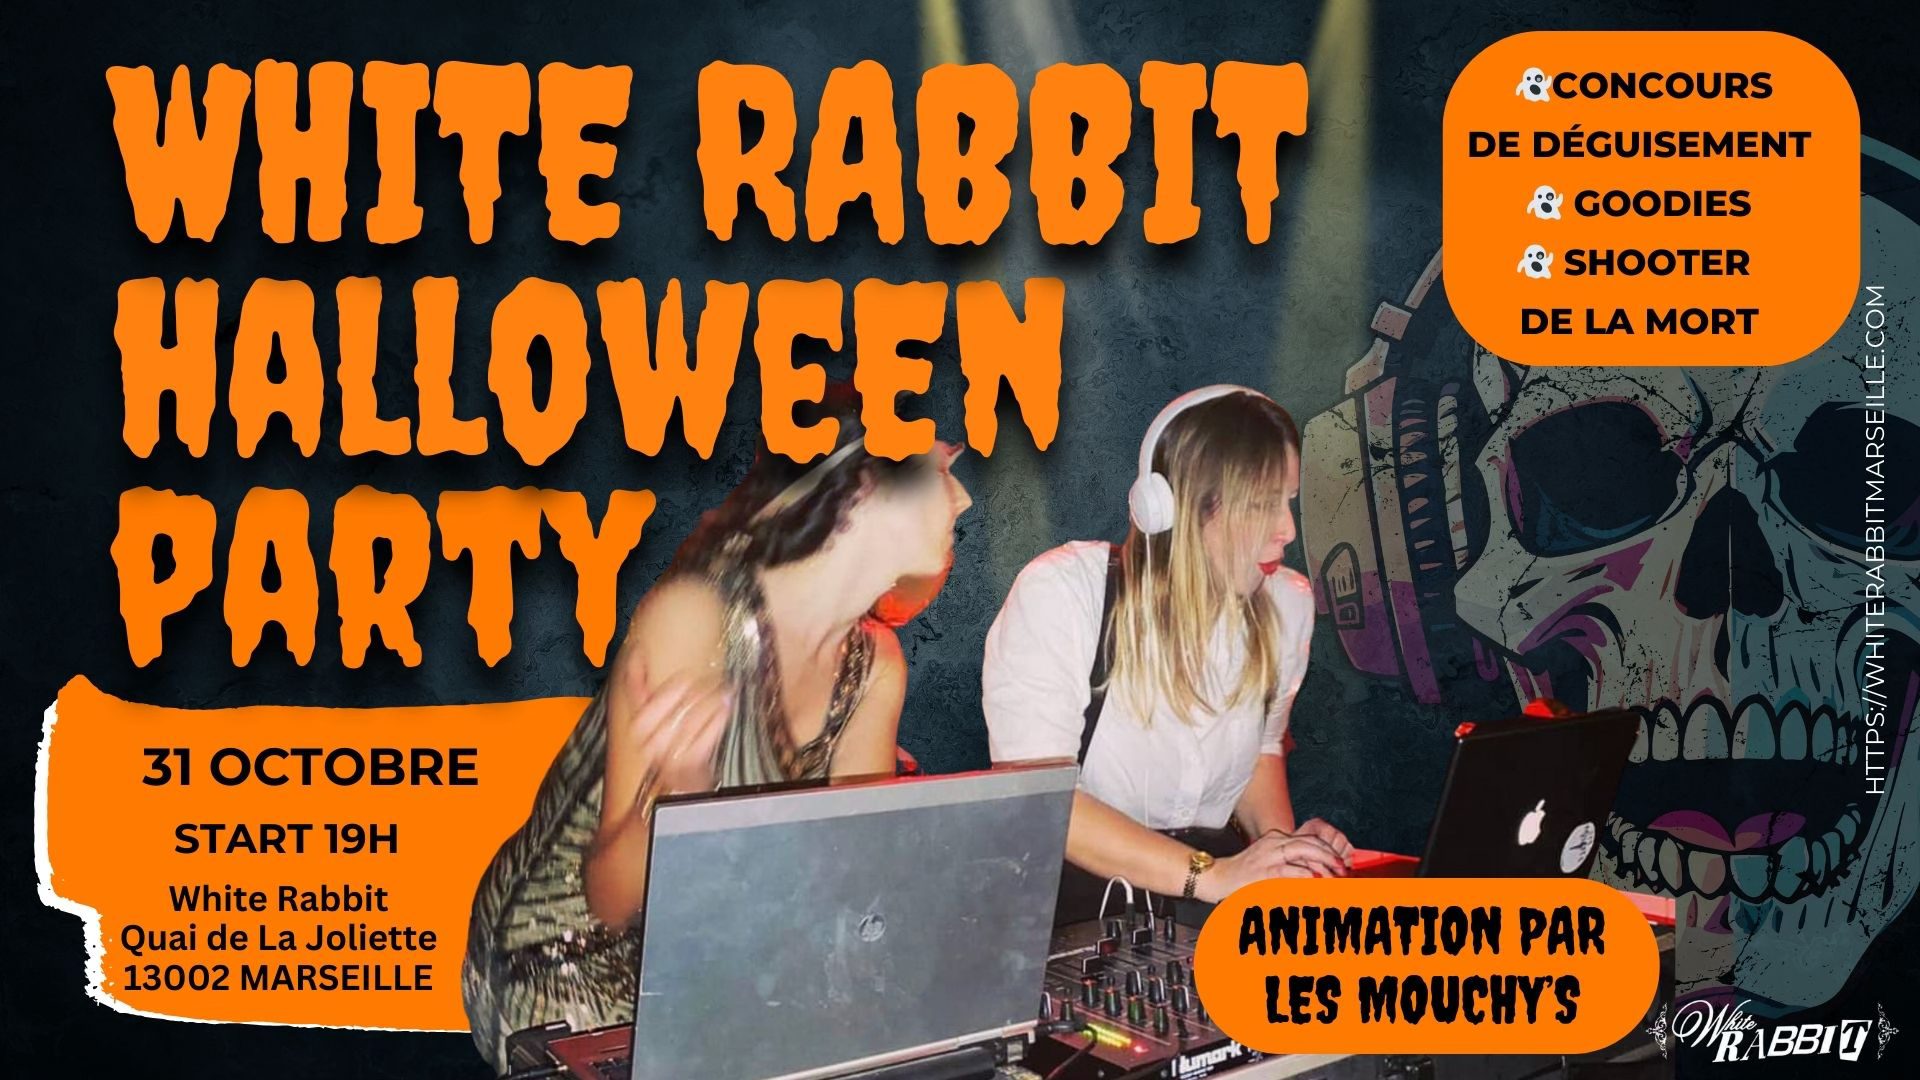 Halloween Party white Rabbit Marseille